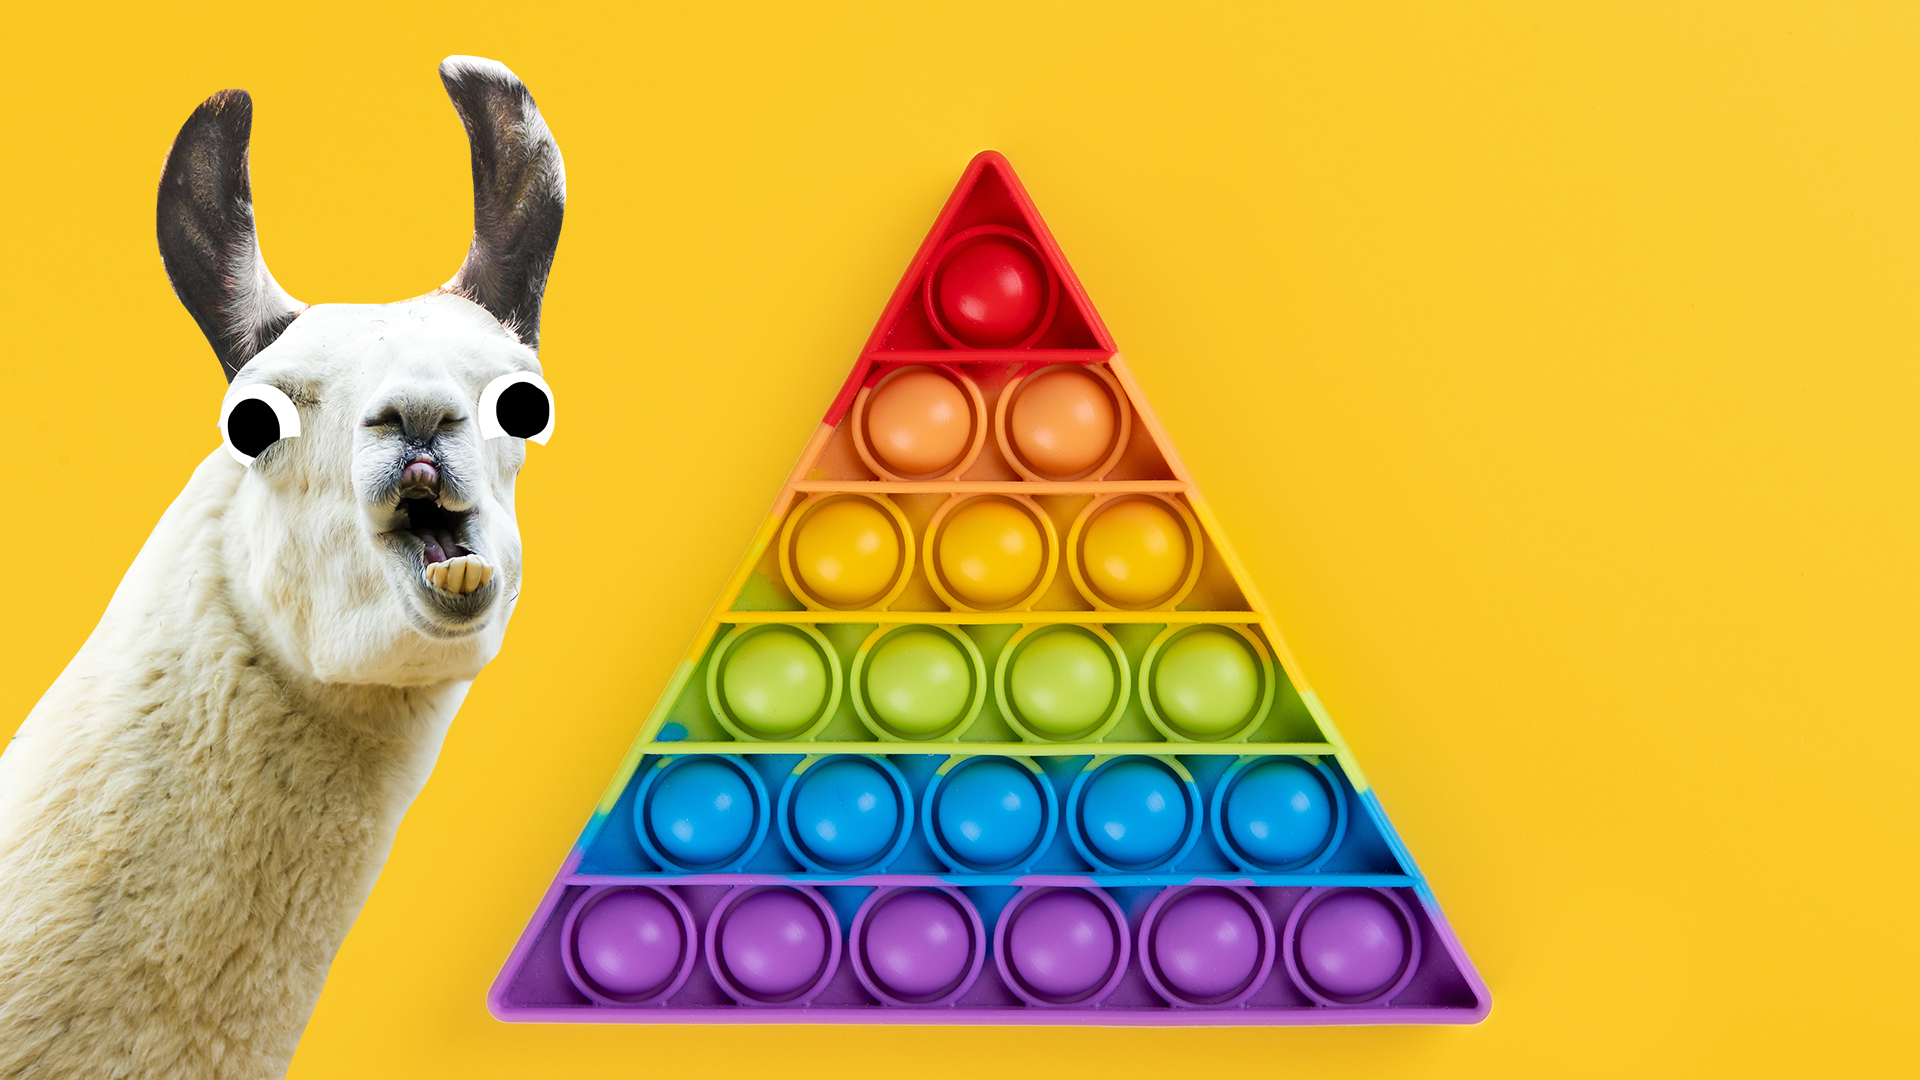 A triangle and a derpy llama